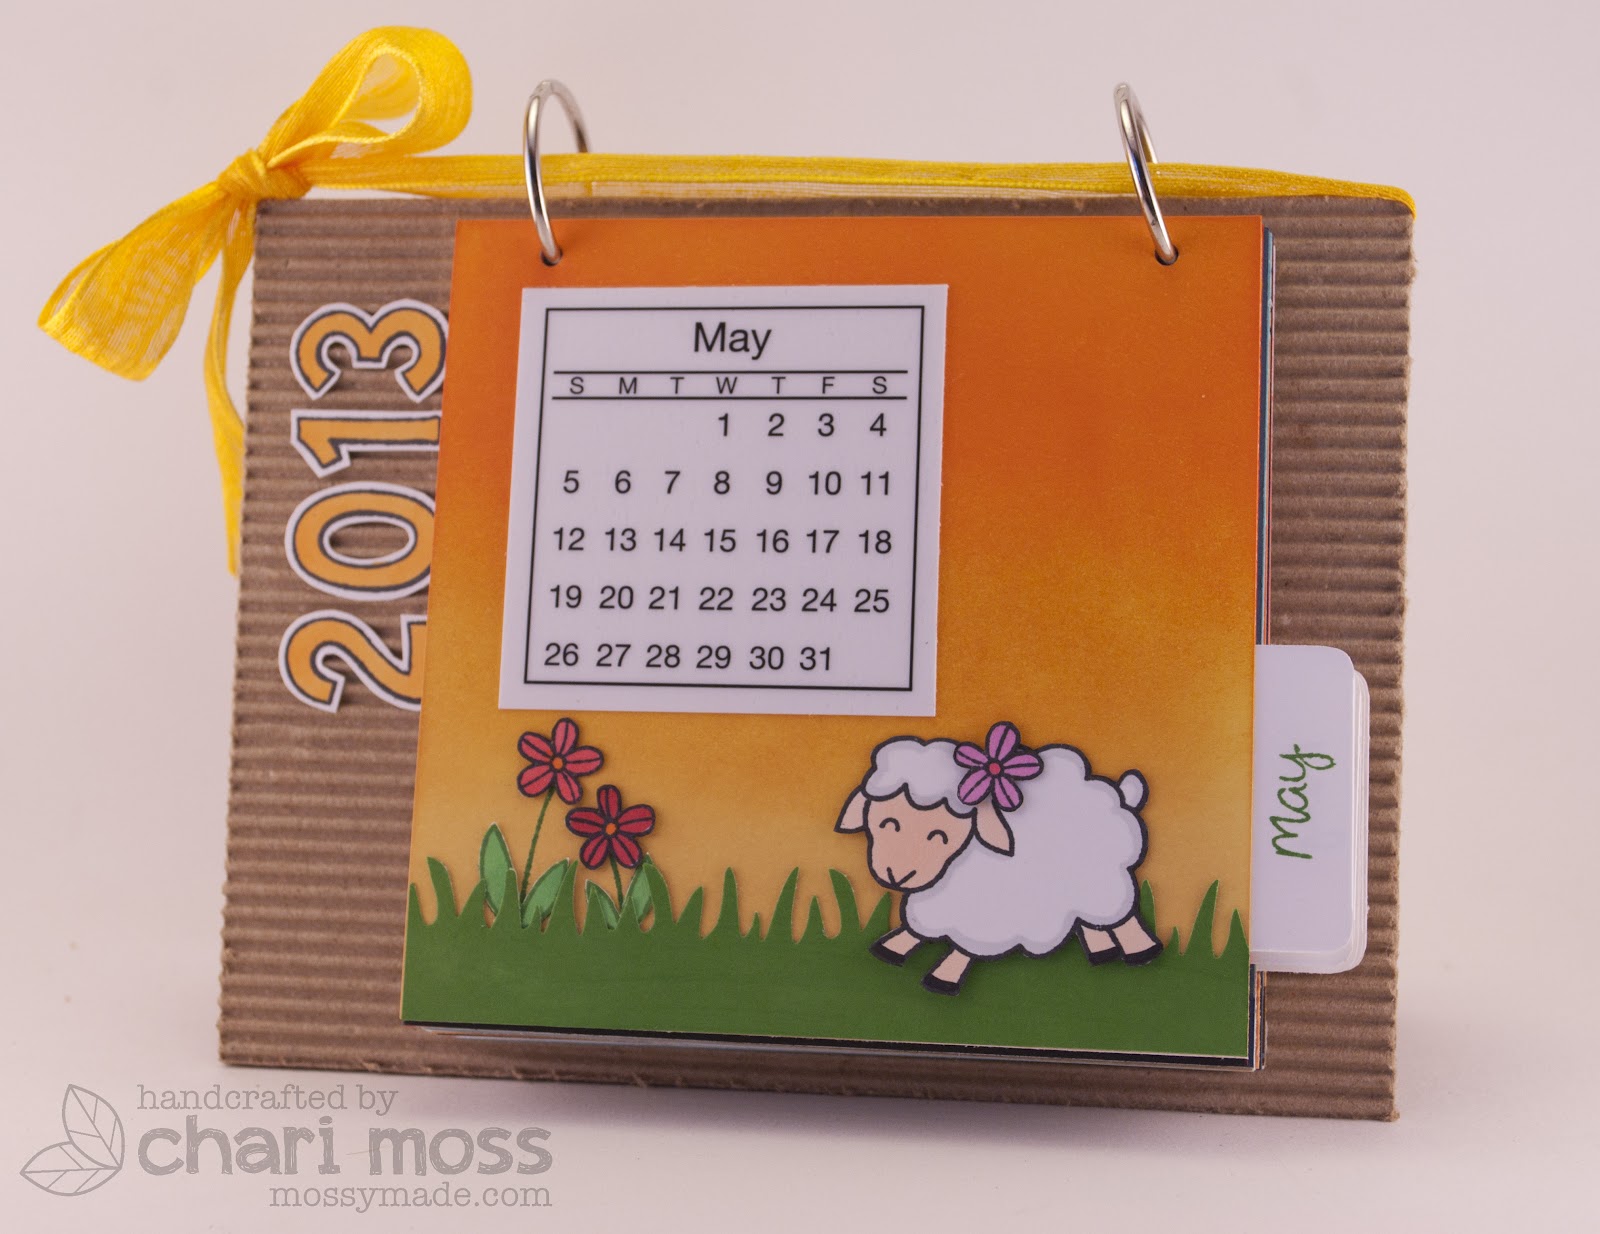 Chari's SRM + Lawn Fawn calendar part 1 Lawn Fawn